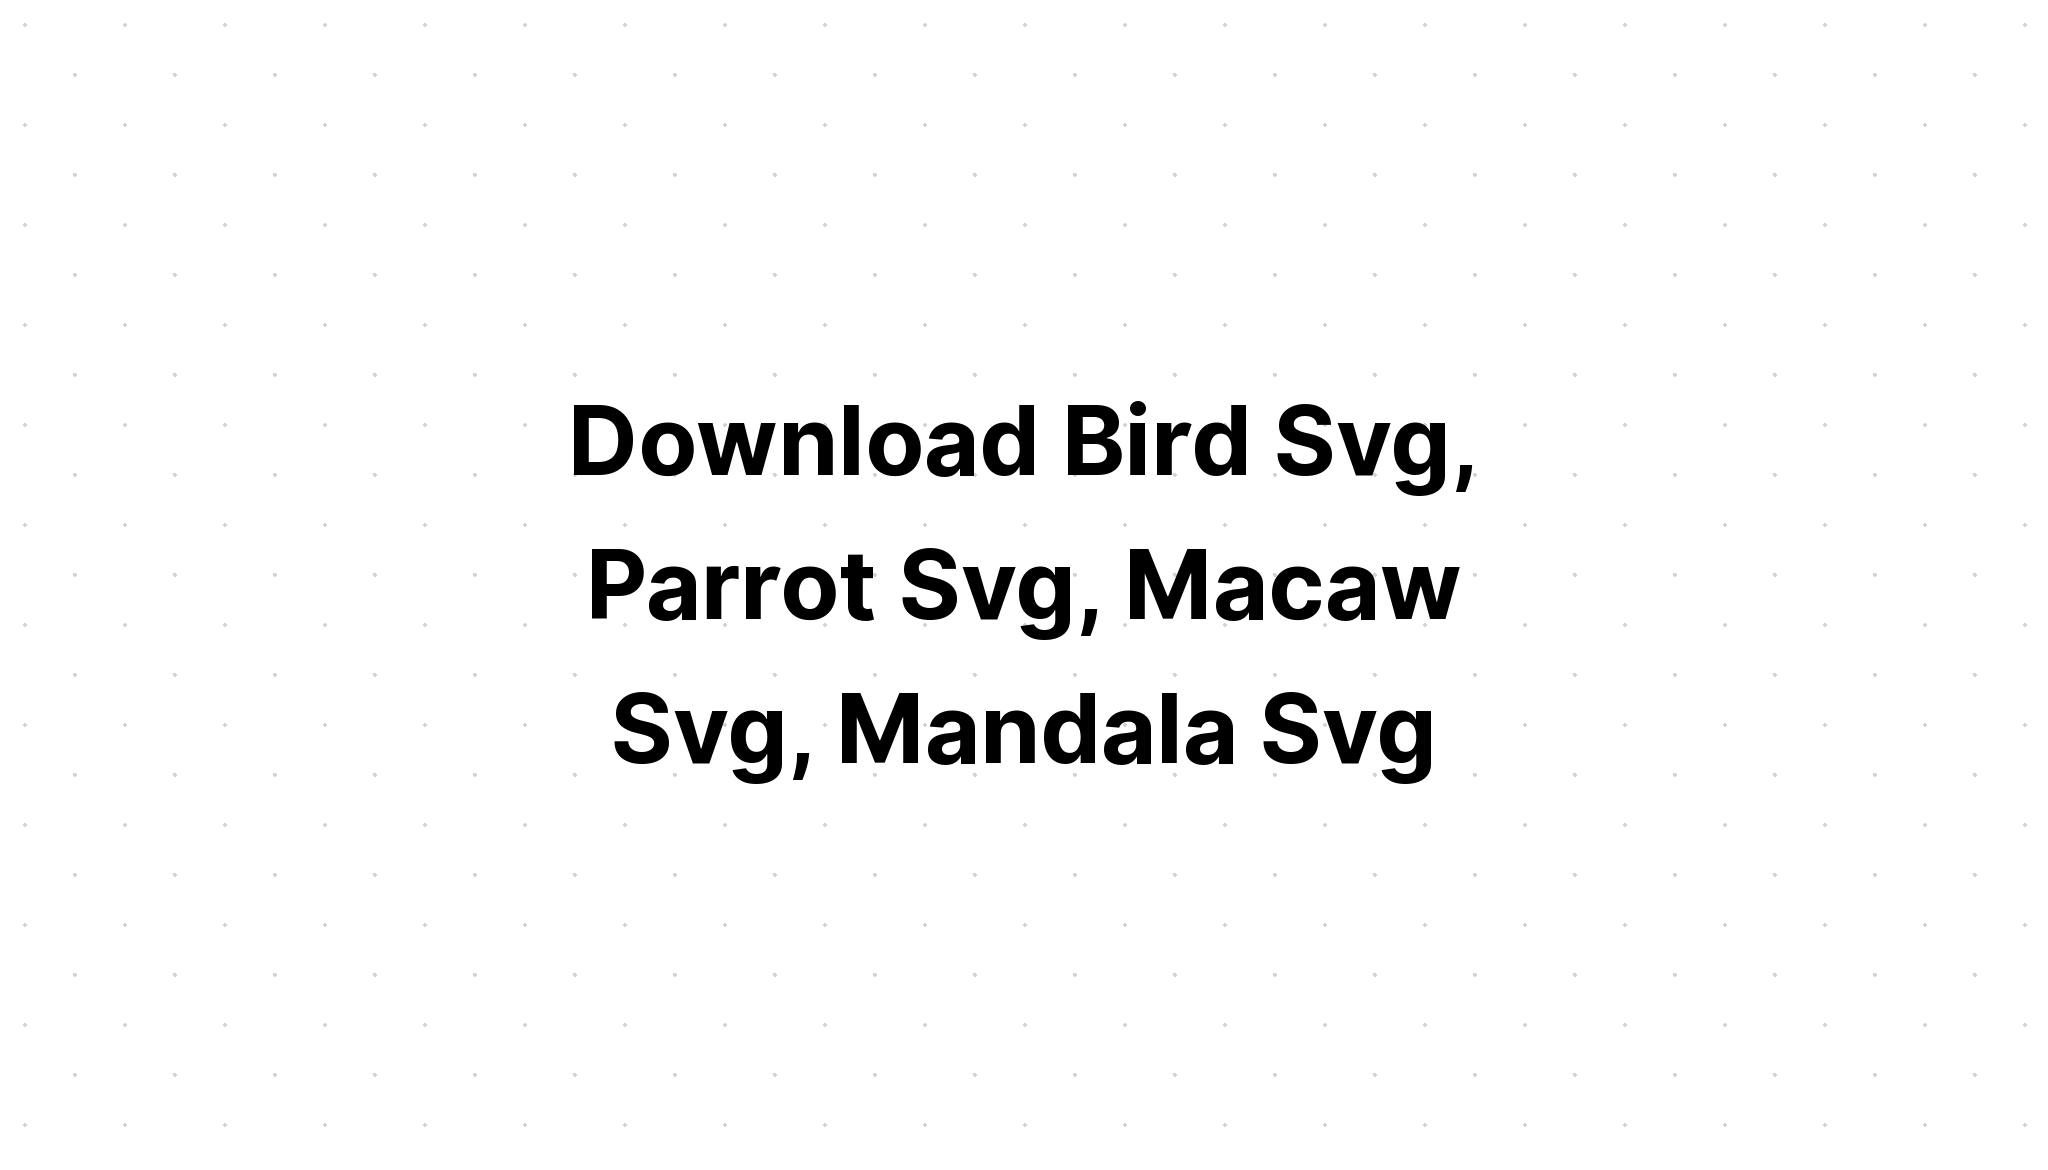 Download Bird Mandala Svg Free For CricutSVG Files